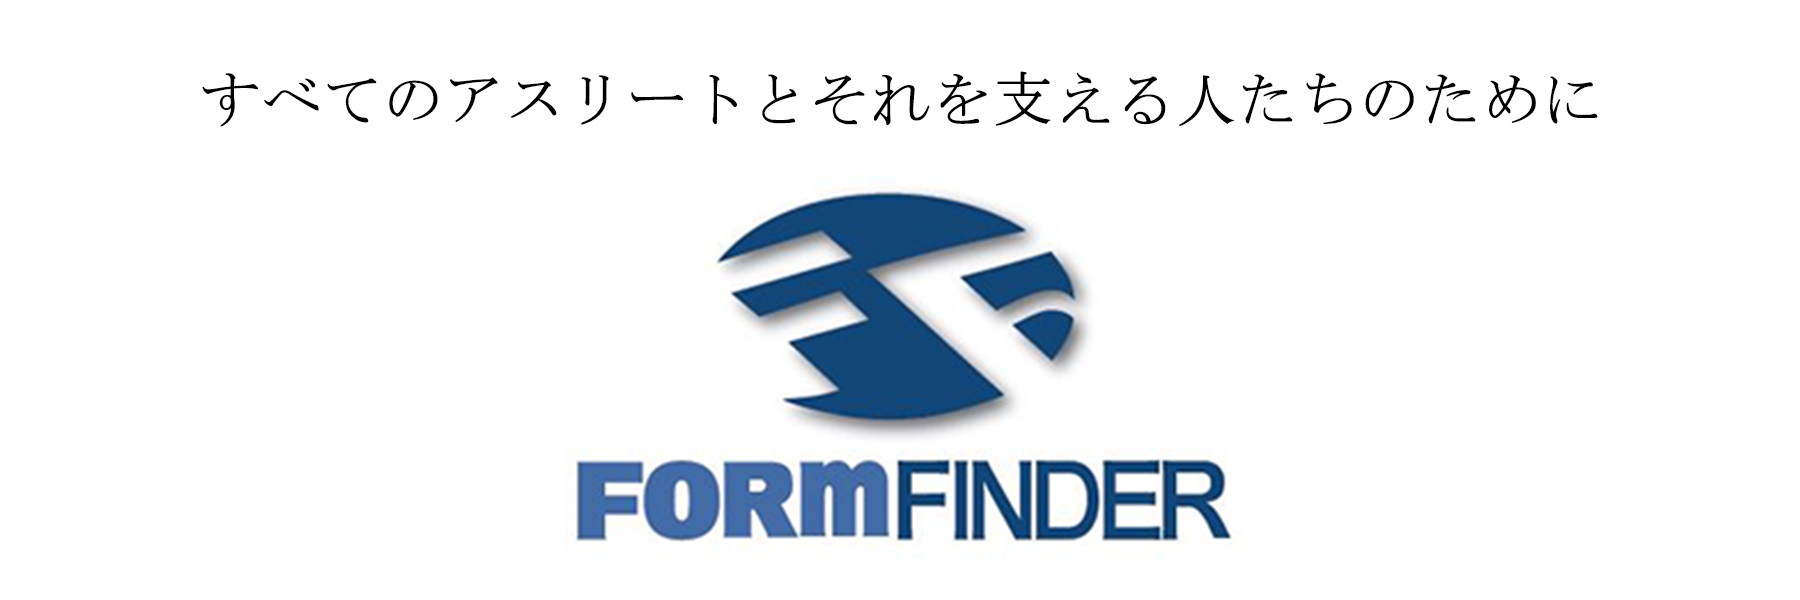 formfinder-top2